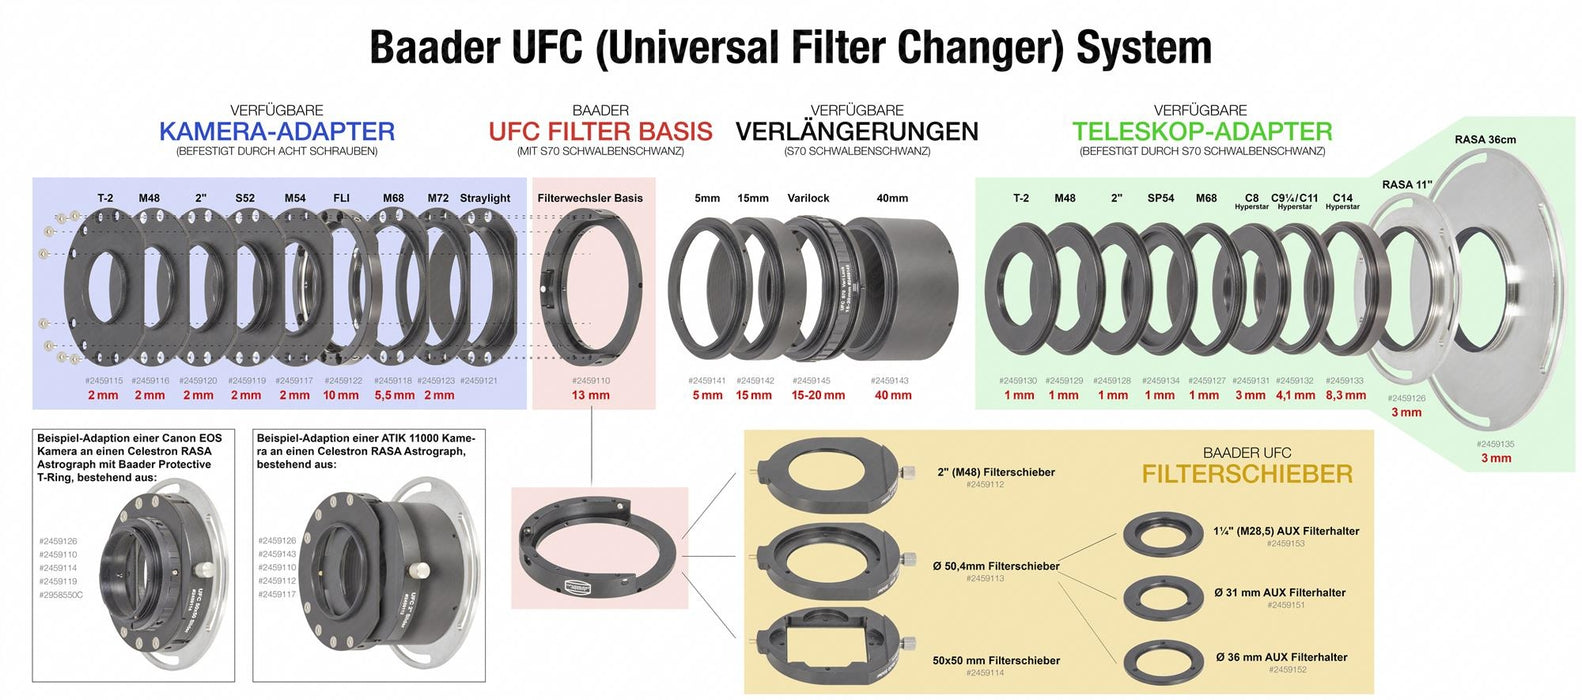 Baader UFC System (Universal Filter Changer)